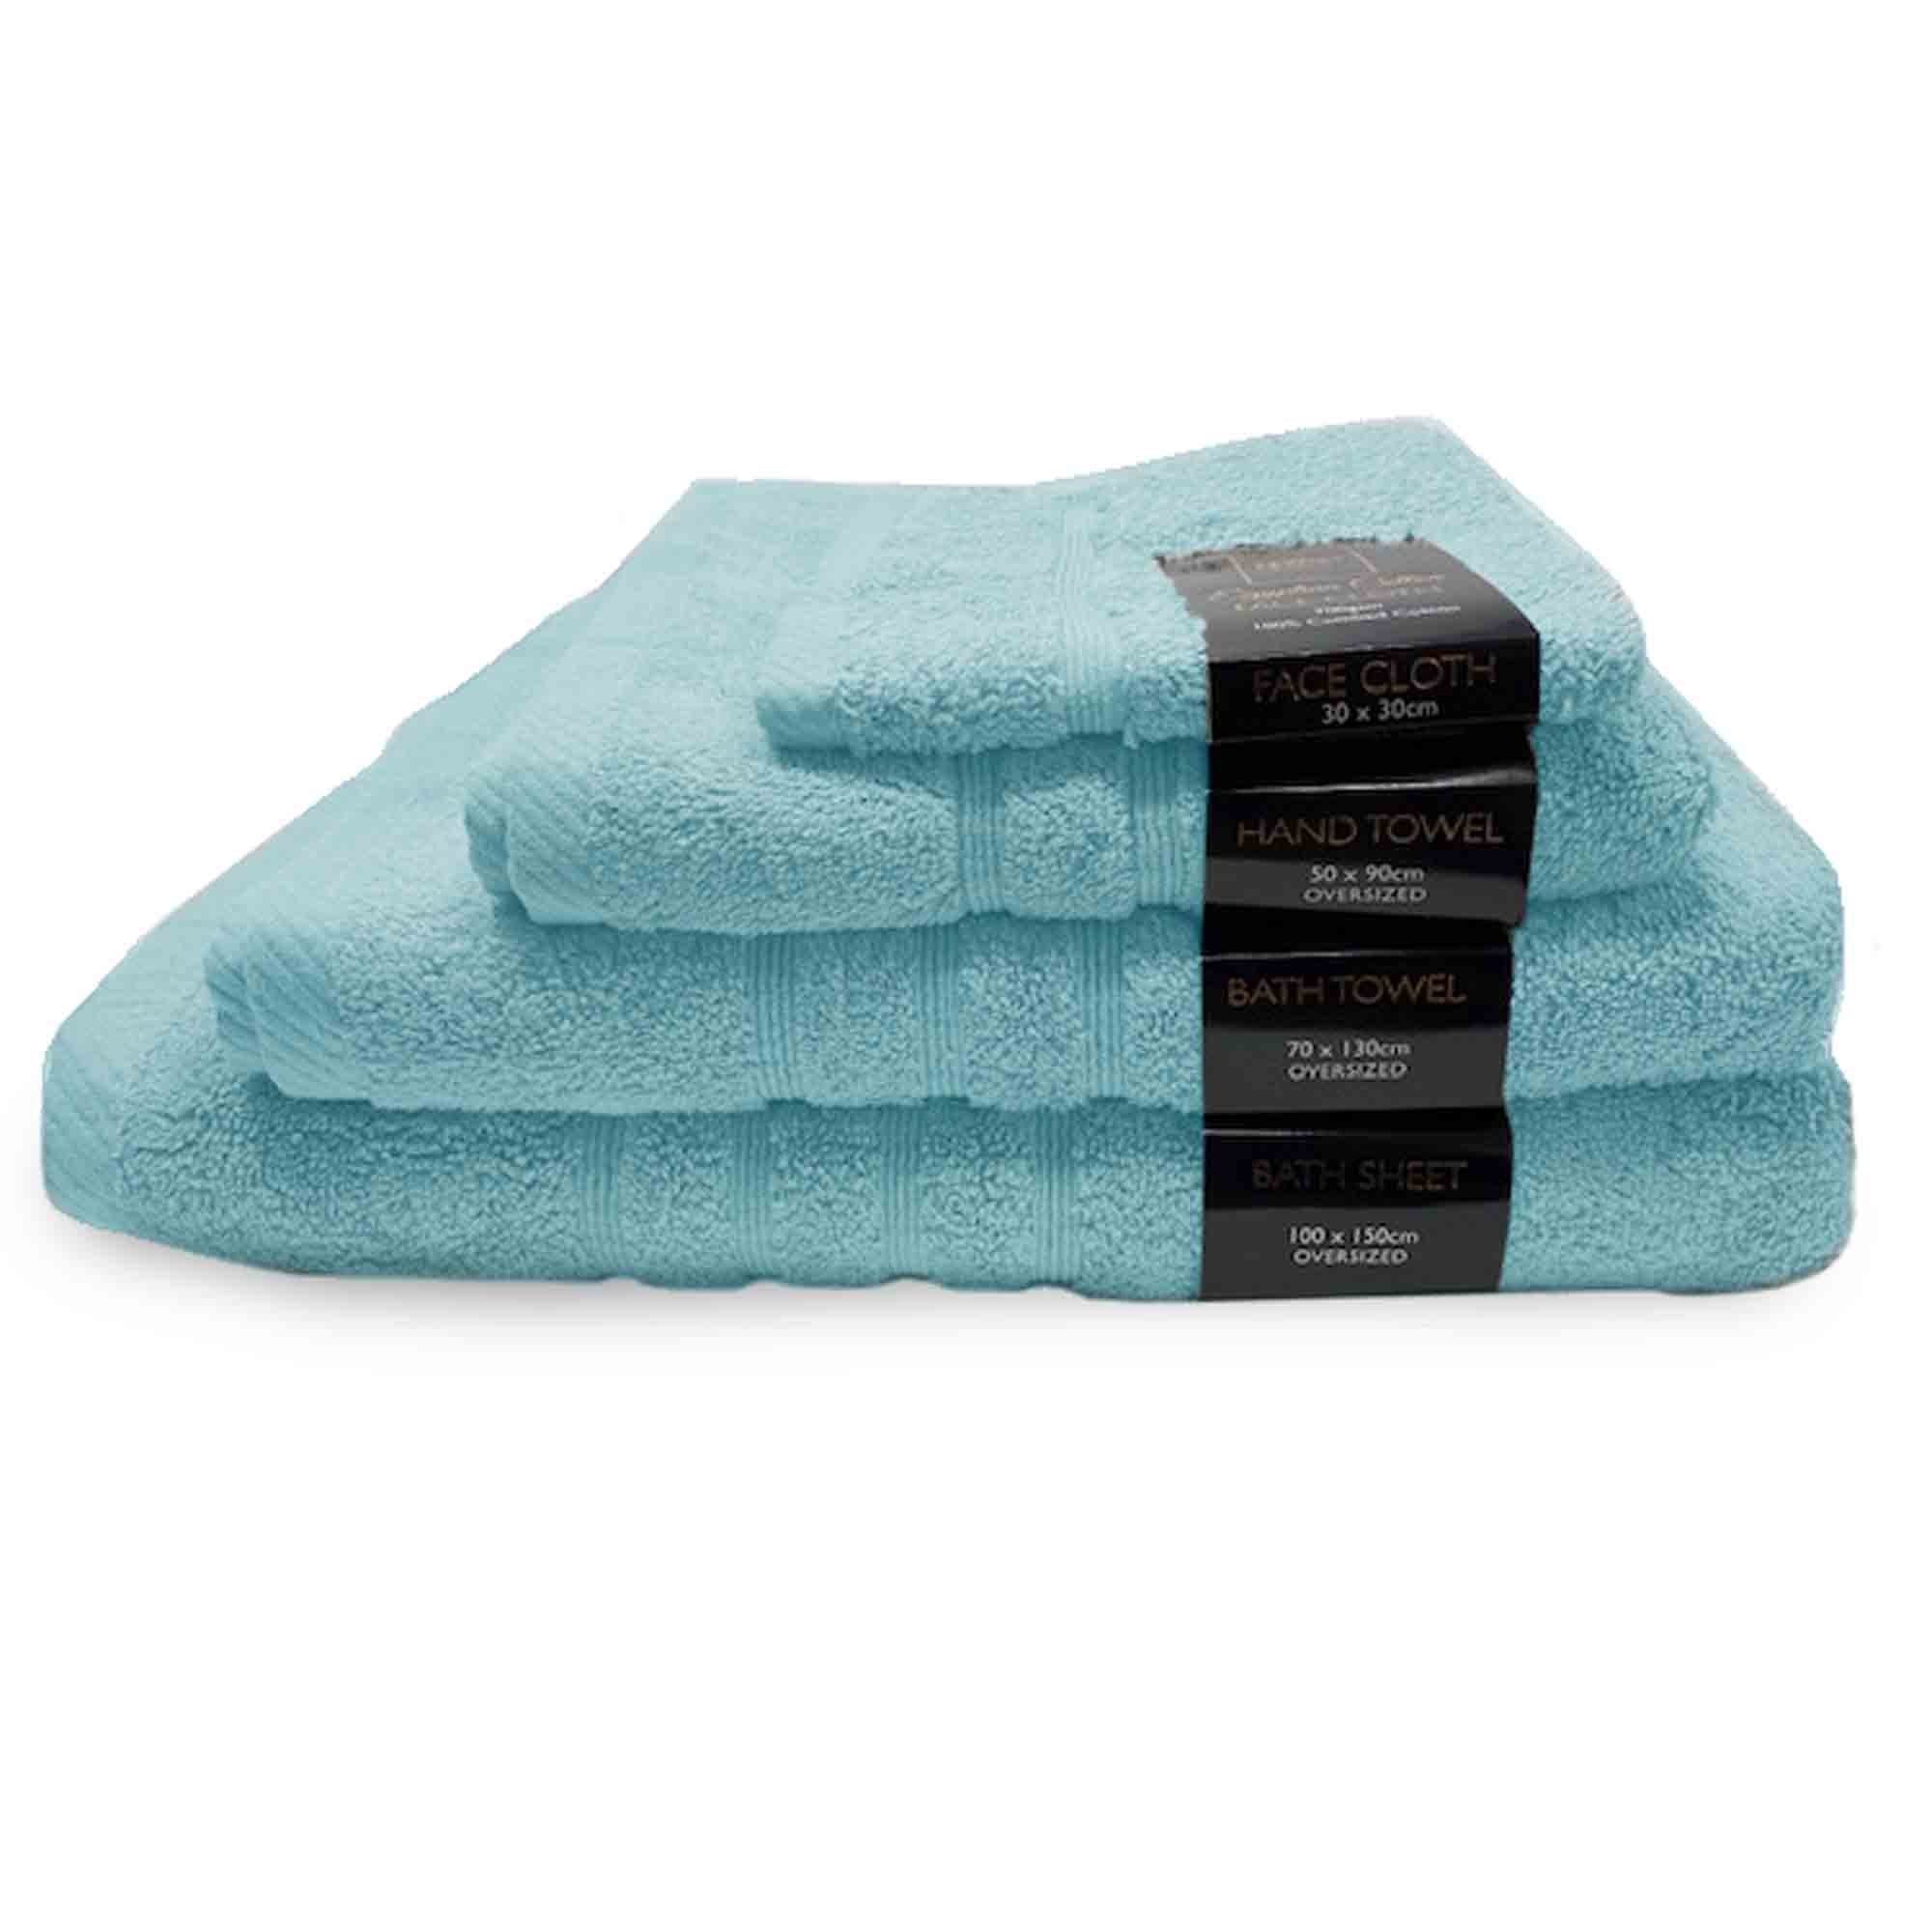 Lewis’s Luxury Egyptian 100% Cotton Towel Range - Teal - Face Cloth  | TJ Hughes